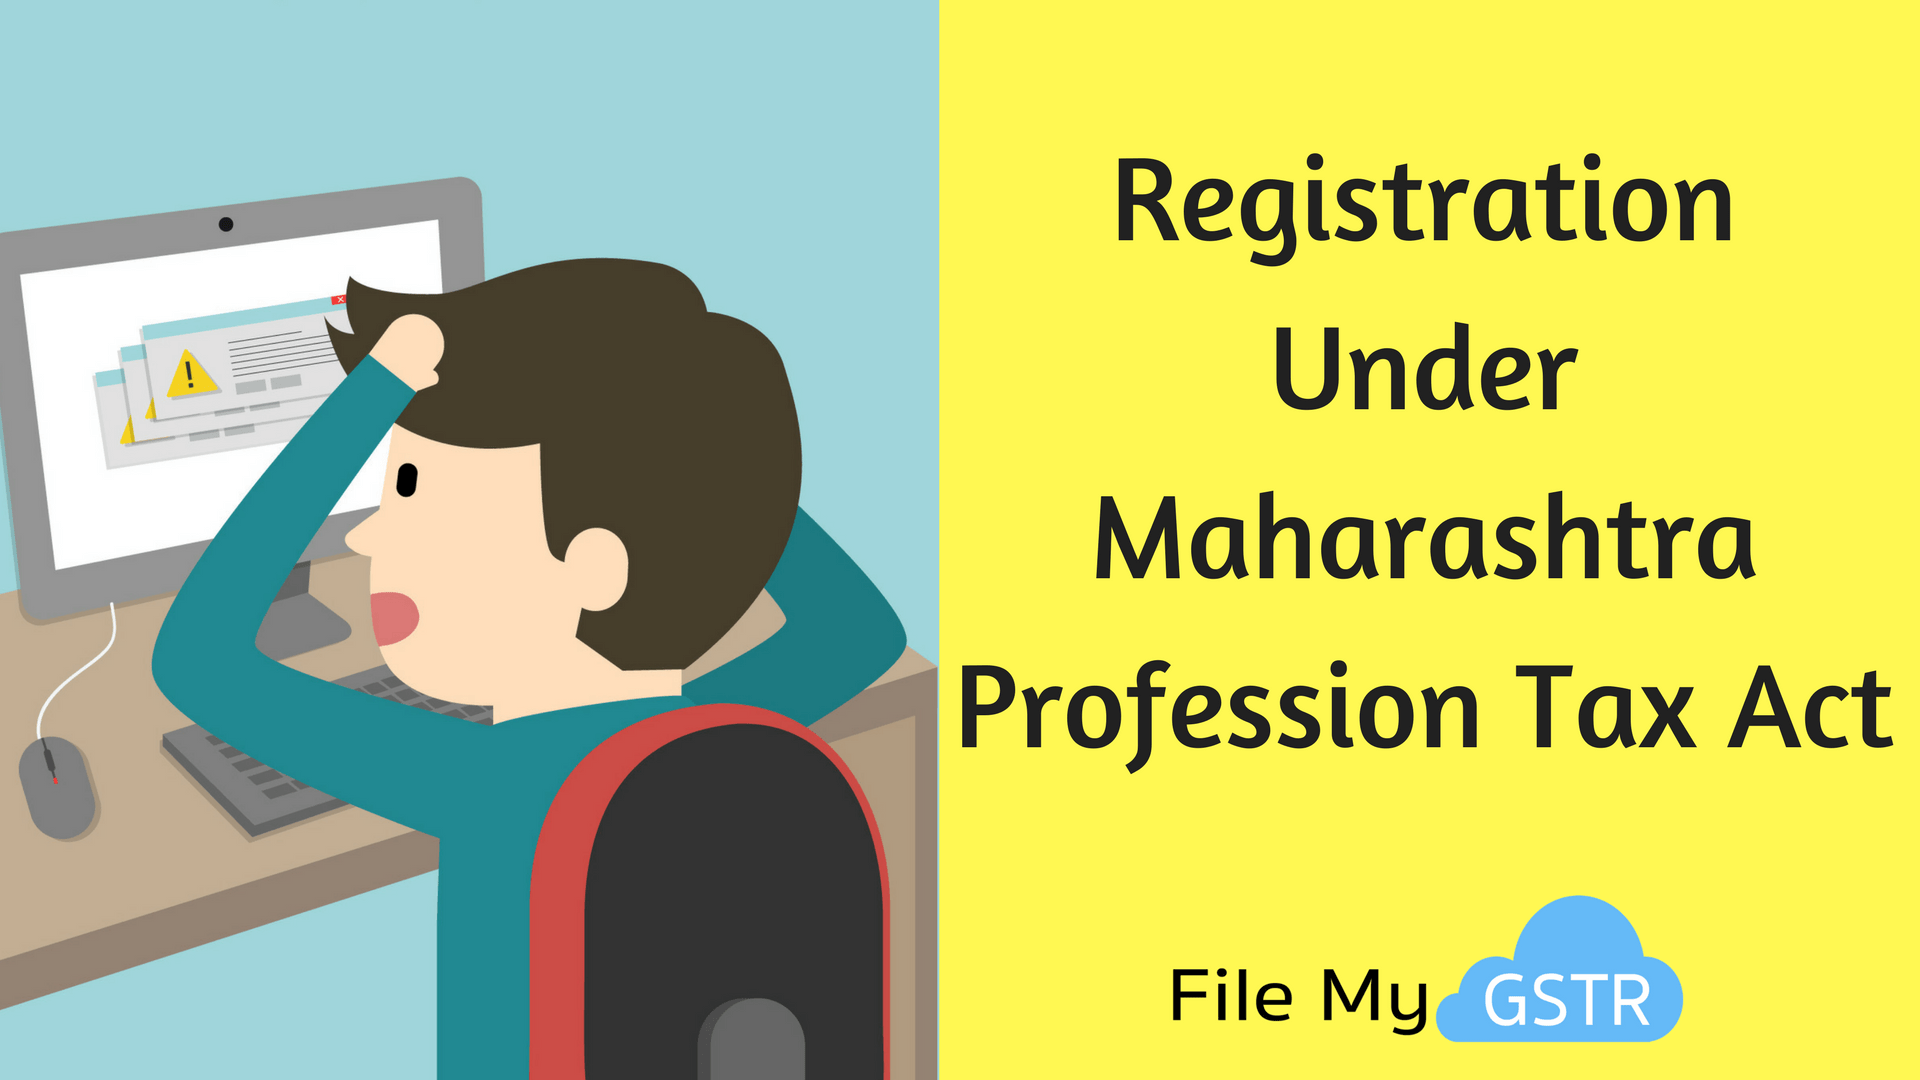 Registration Under Maharashtra Profession Tax Act